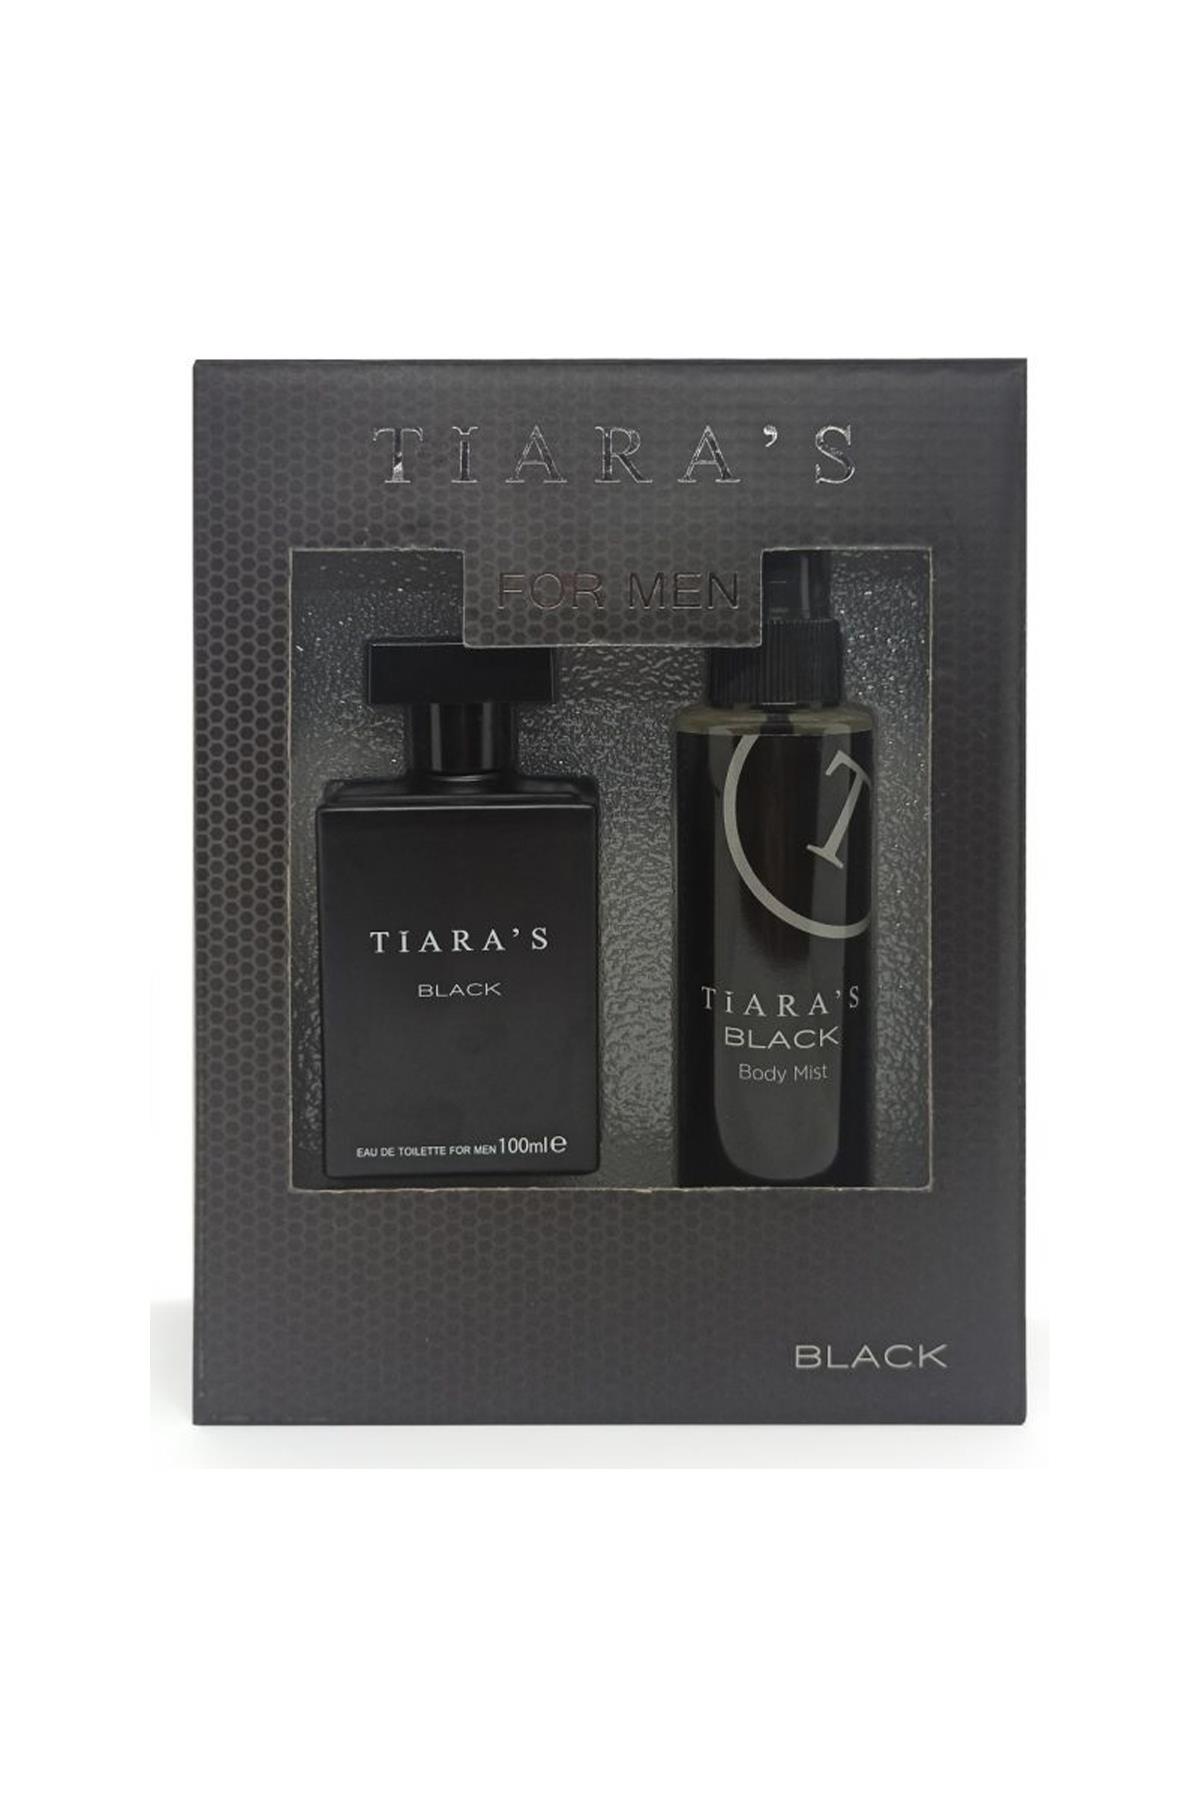 tiaras-black-erkek-parfum-edt-100-ml-deodorant-150-ml-10088.jpg